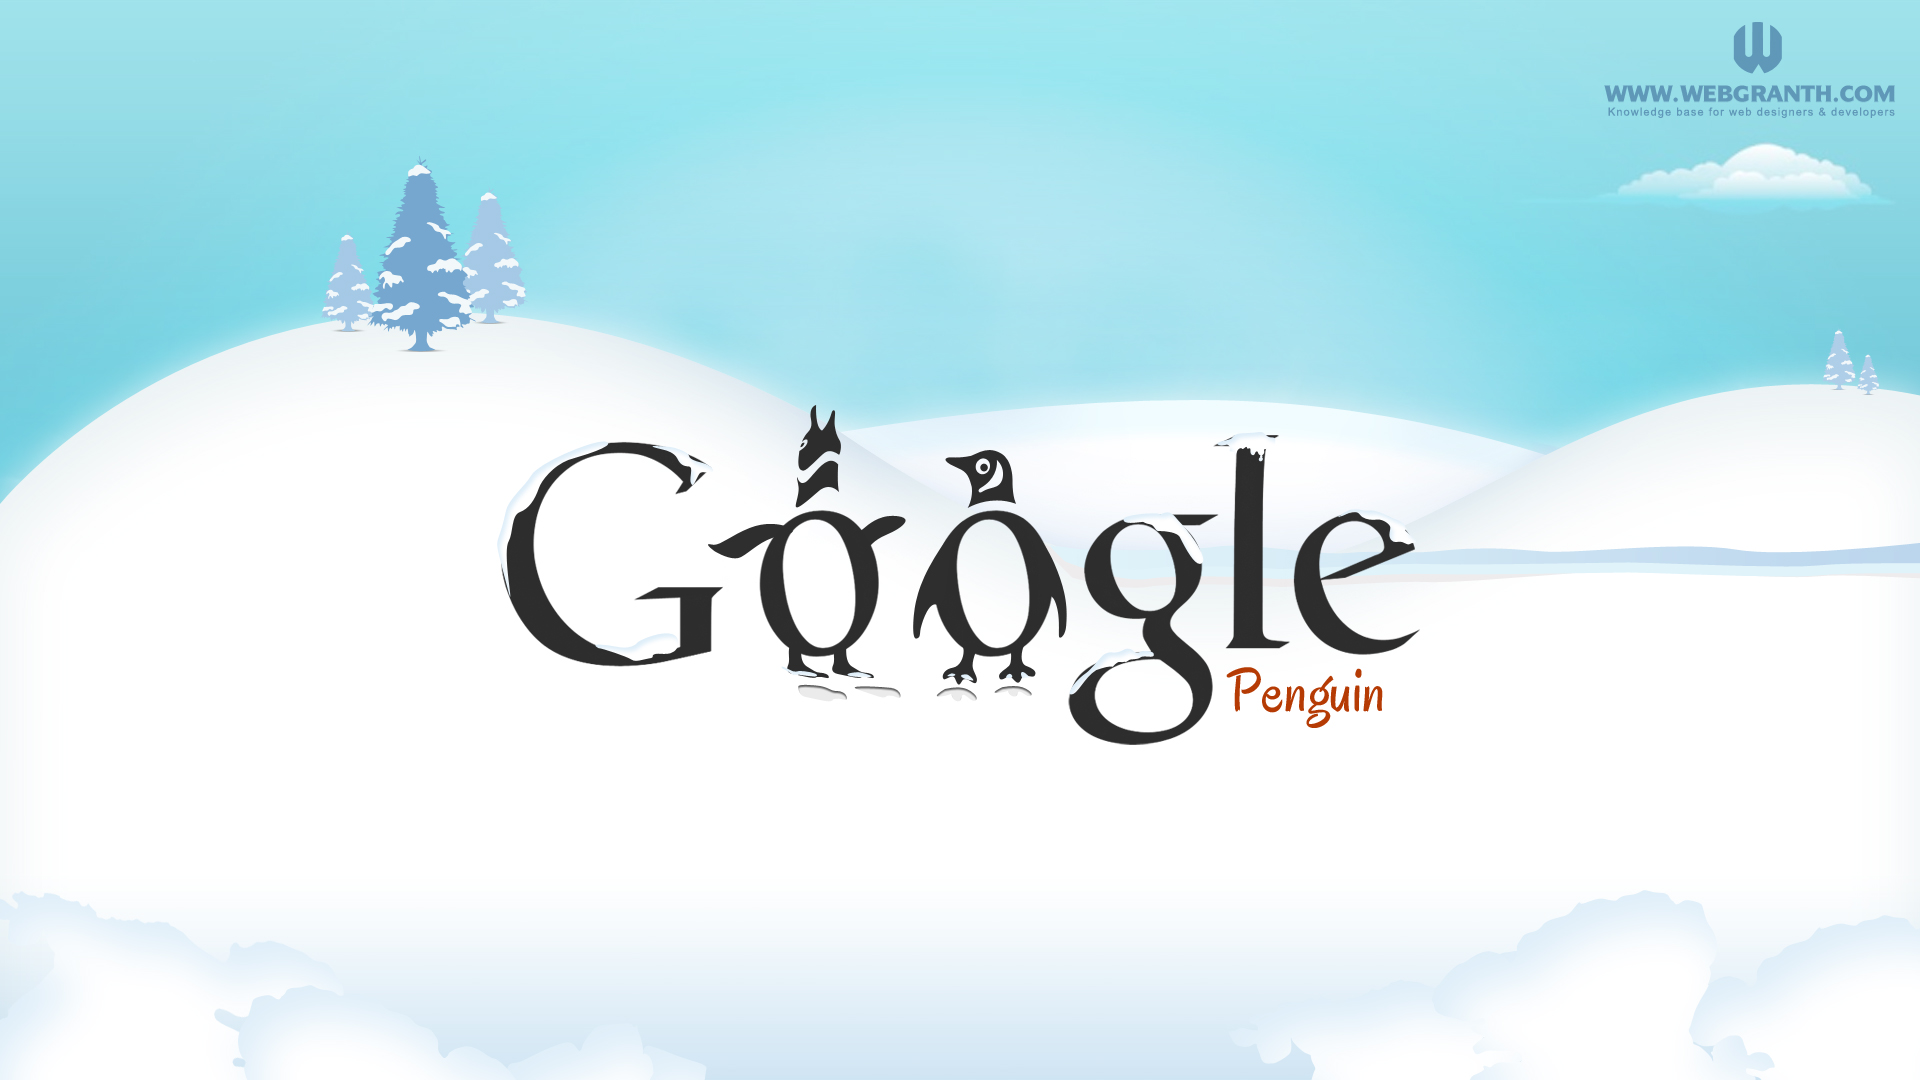 HD Google Penguin Desktop Background Calendar June